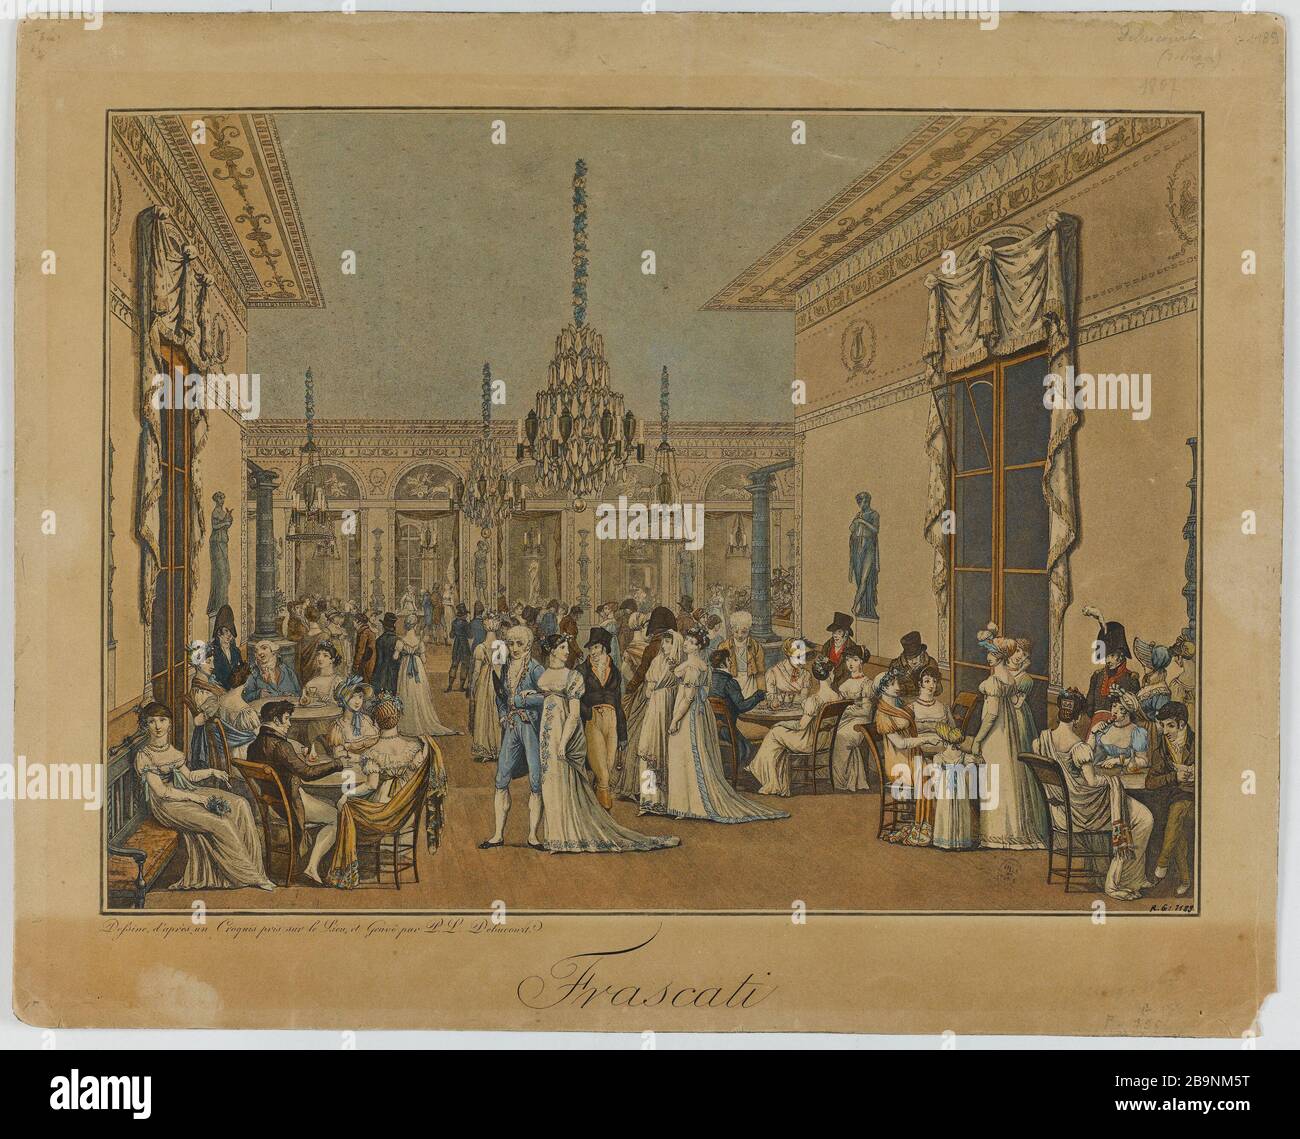 Frascati Debucourt Louis- Philibert (1755-1832). "Frascati". Tiefdruck (Aquatinte en couleur, eau-forte). 18051. Paris, musée Carnavalet. Stockfoto